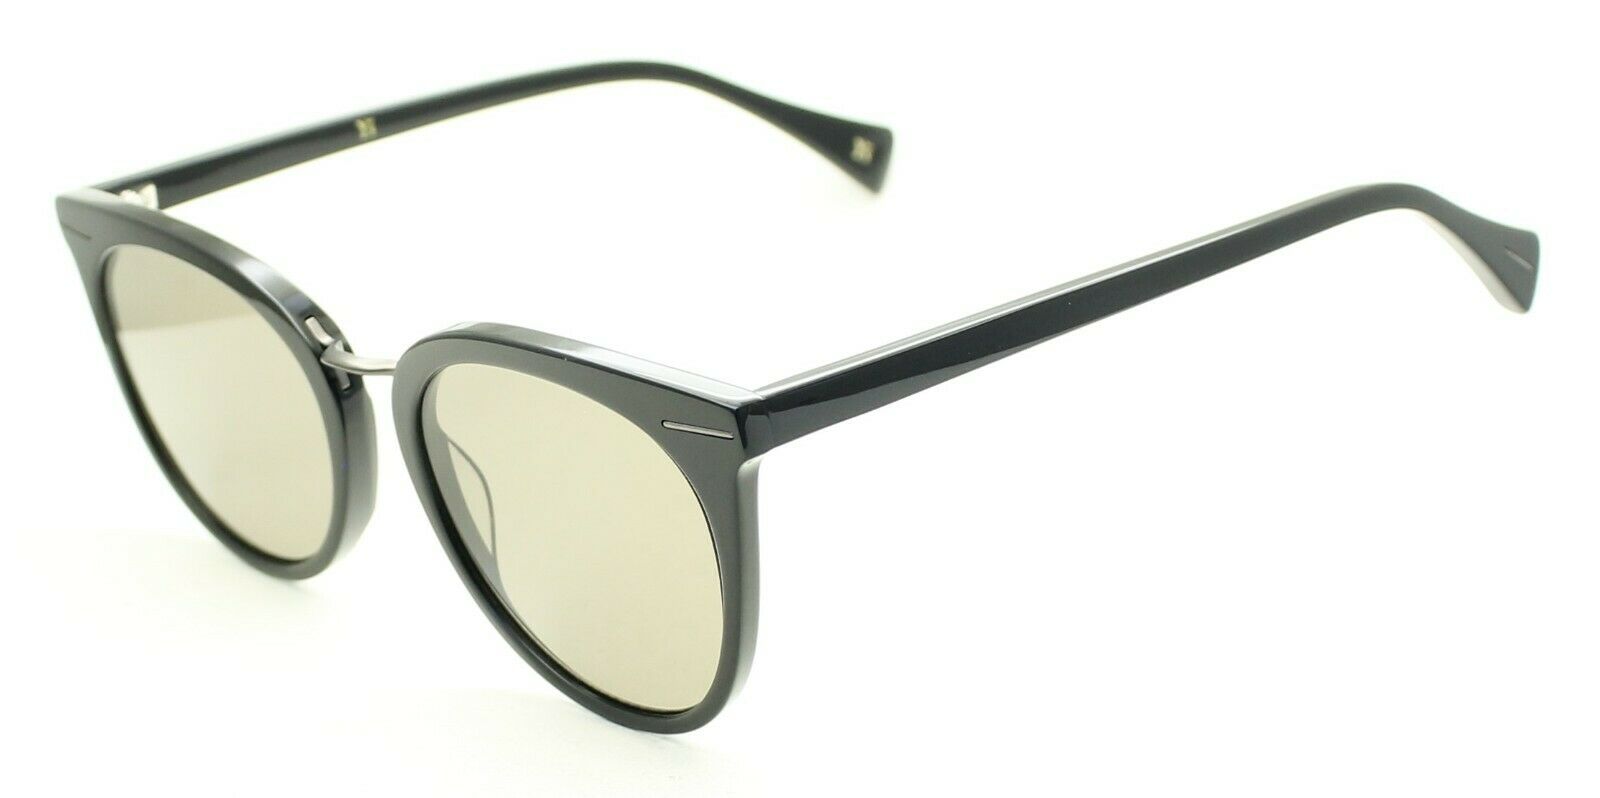 YOHJI YAMAMOTO YS5006 001 51mm Black Sunglasses Eyewear Shades Frames - France